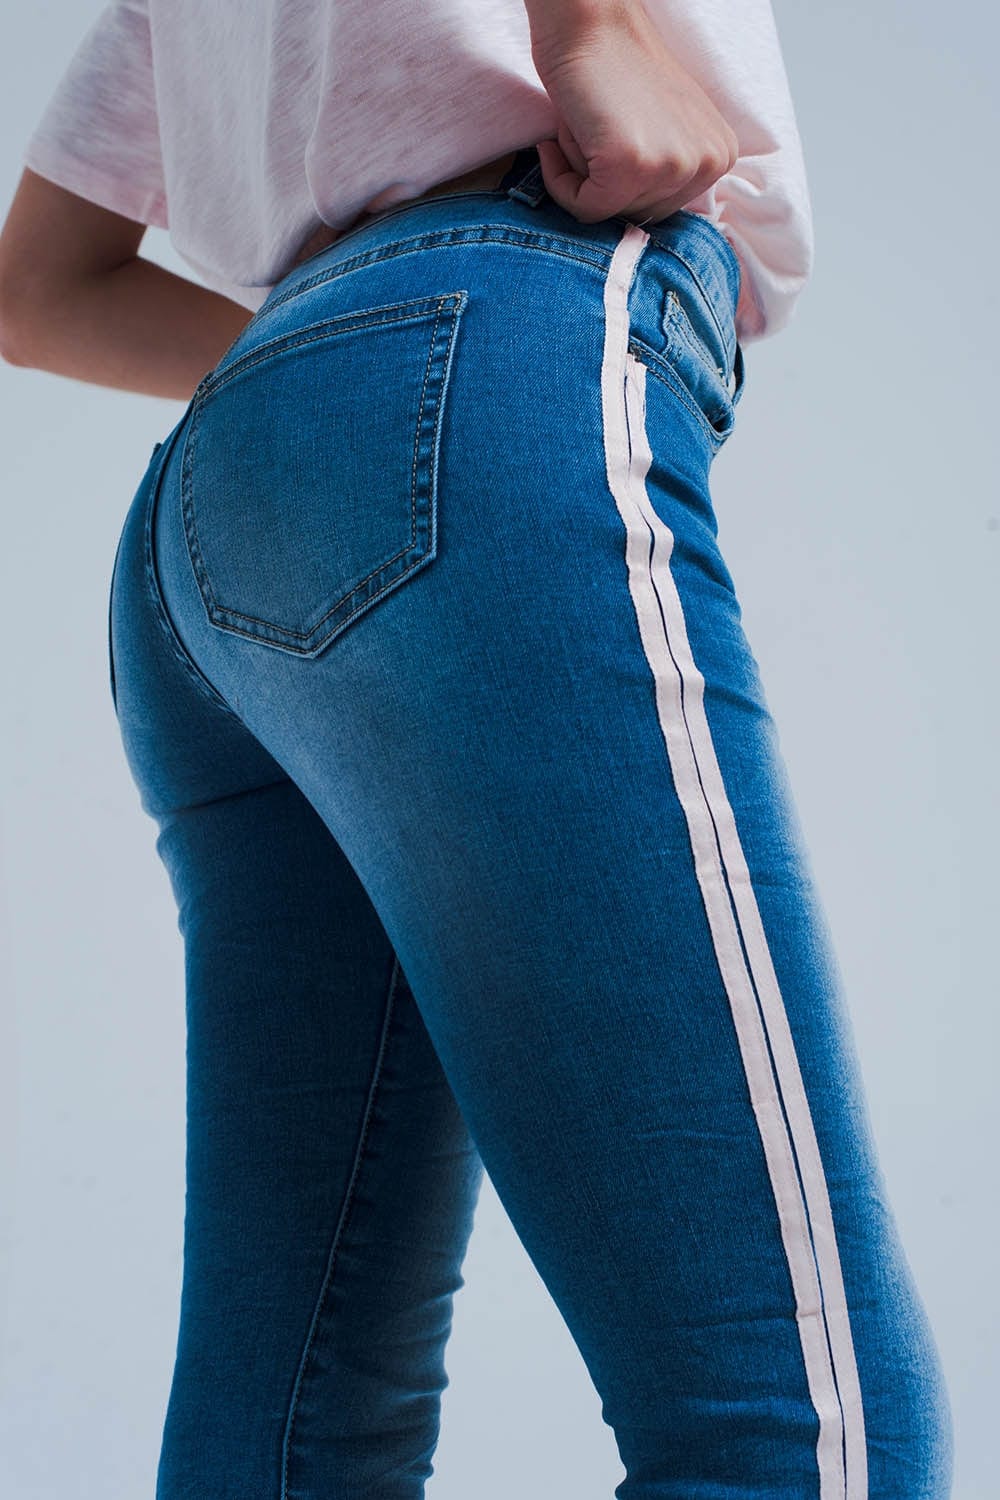 Q2 Women's Jean Skinny Jeans with Side Seam Stripes